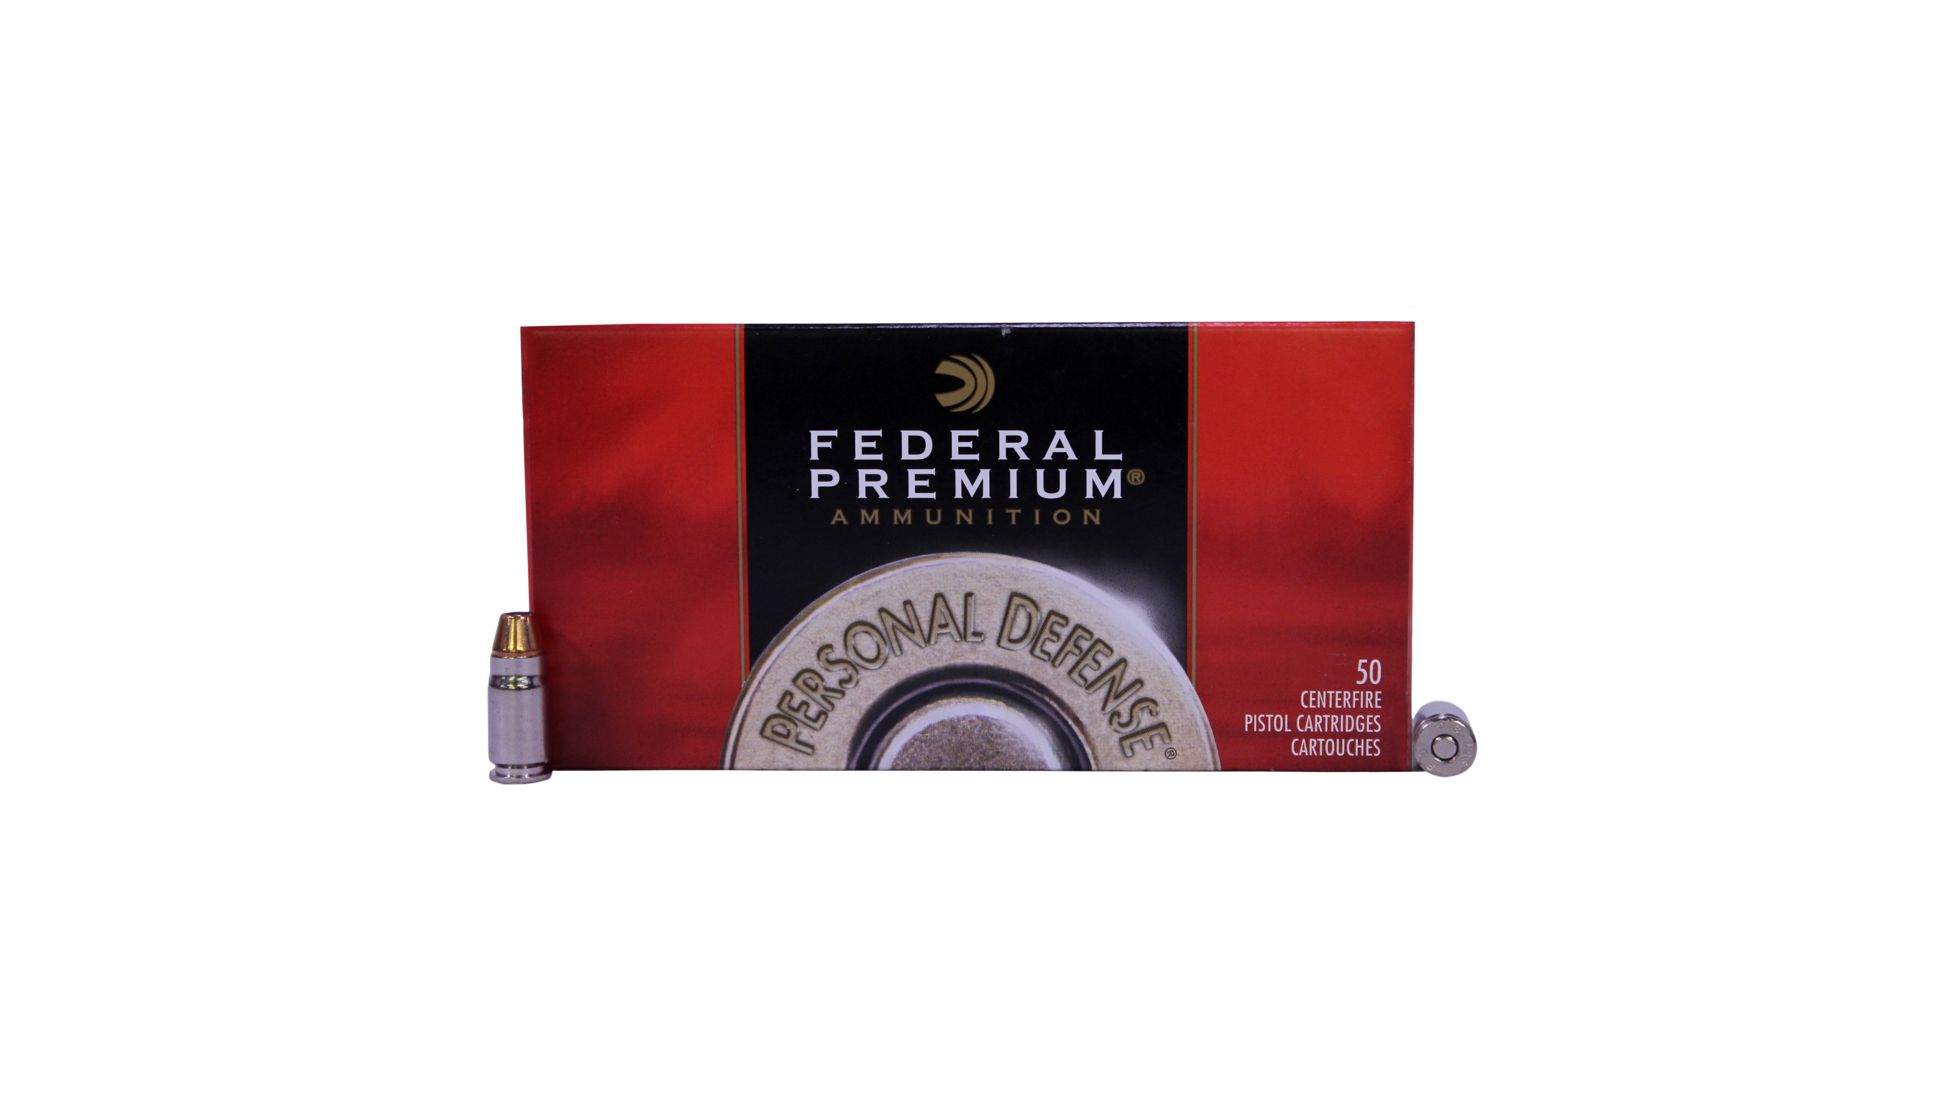 Federal Premium Centerfire Handgun Ammunition .32 ACP 65 grain Jacketed Hollow Point Brass Cased Centerfire Pistol Ammunition